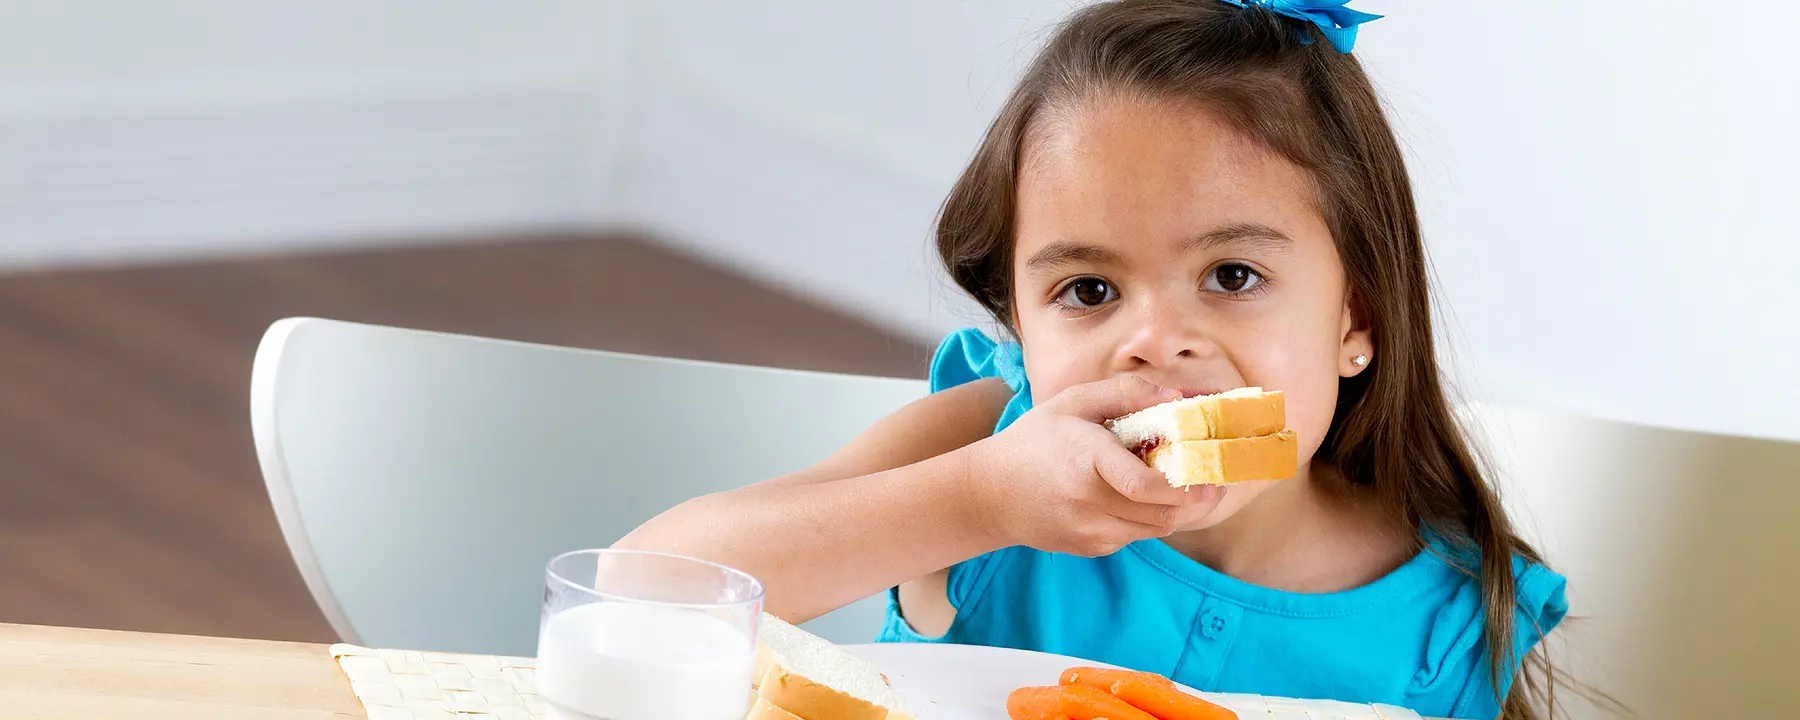 A preschool girl eating a sandwich